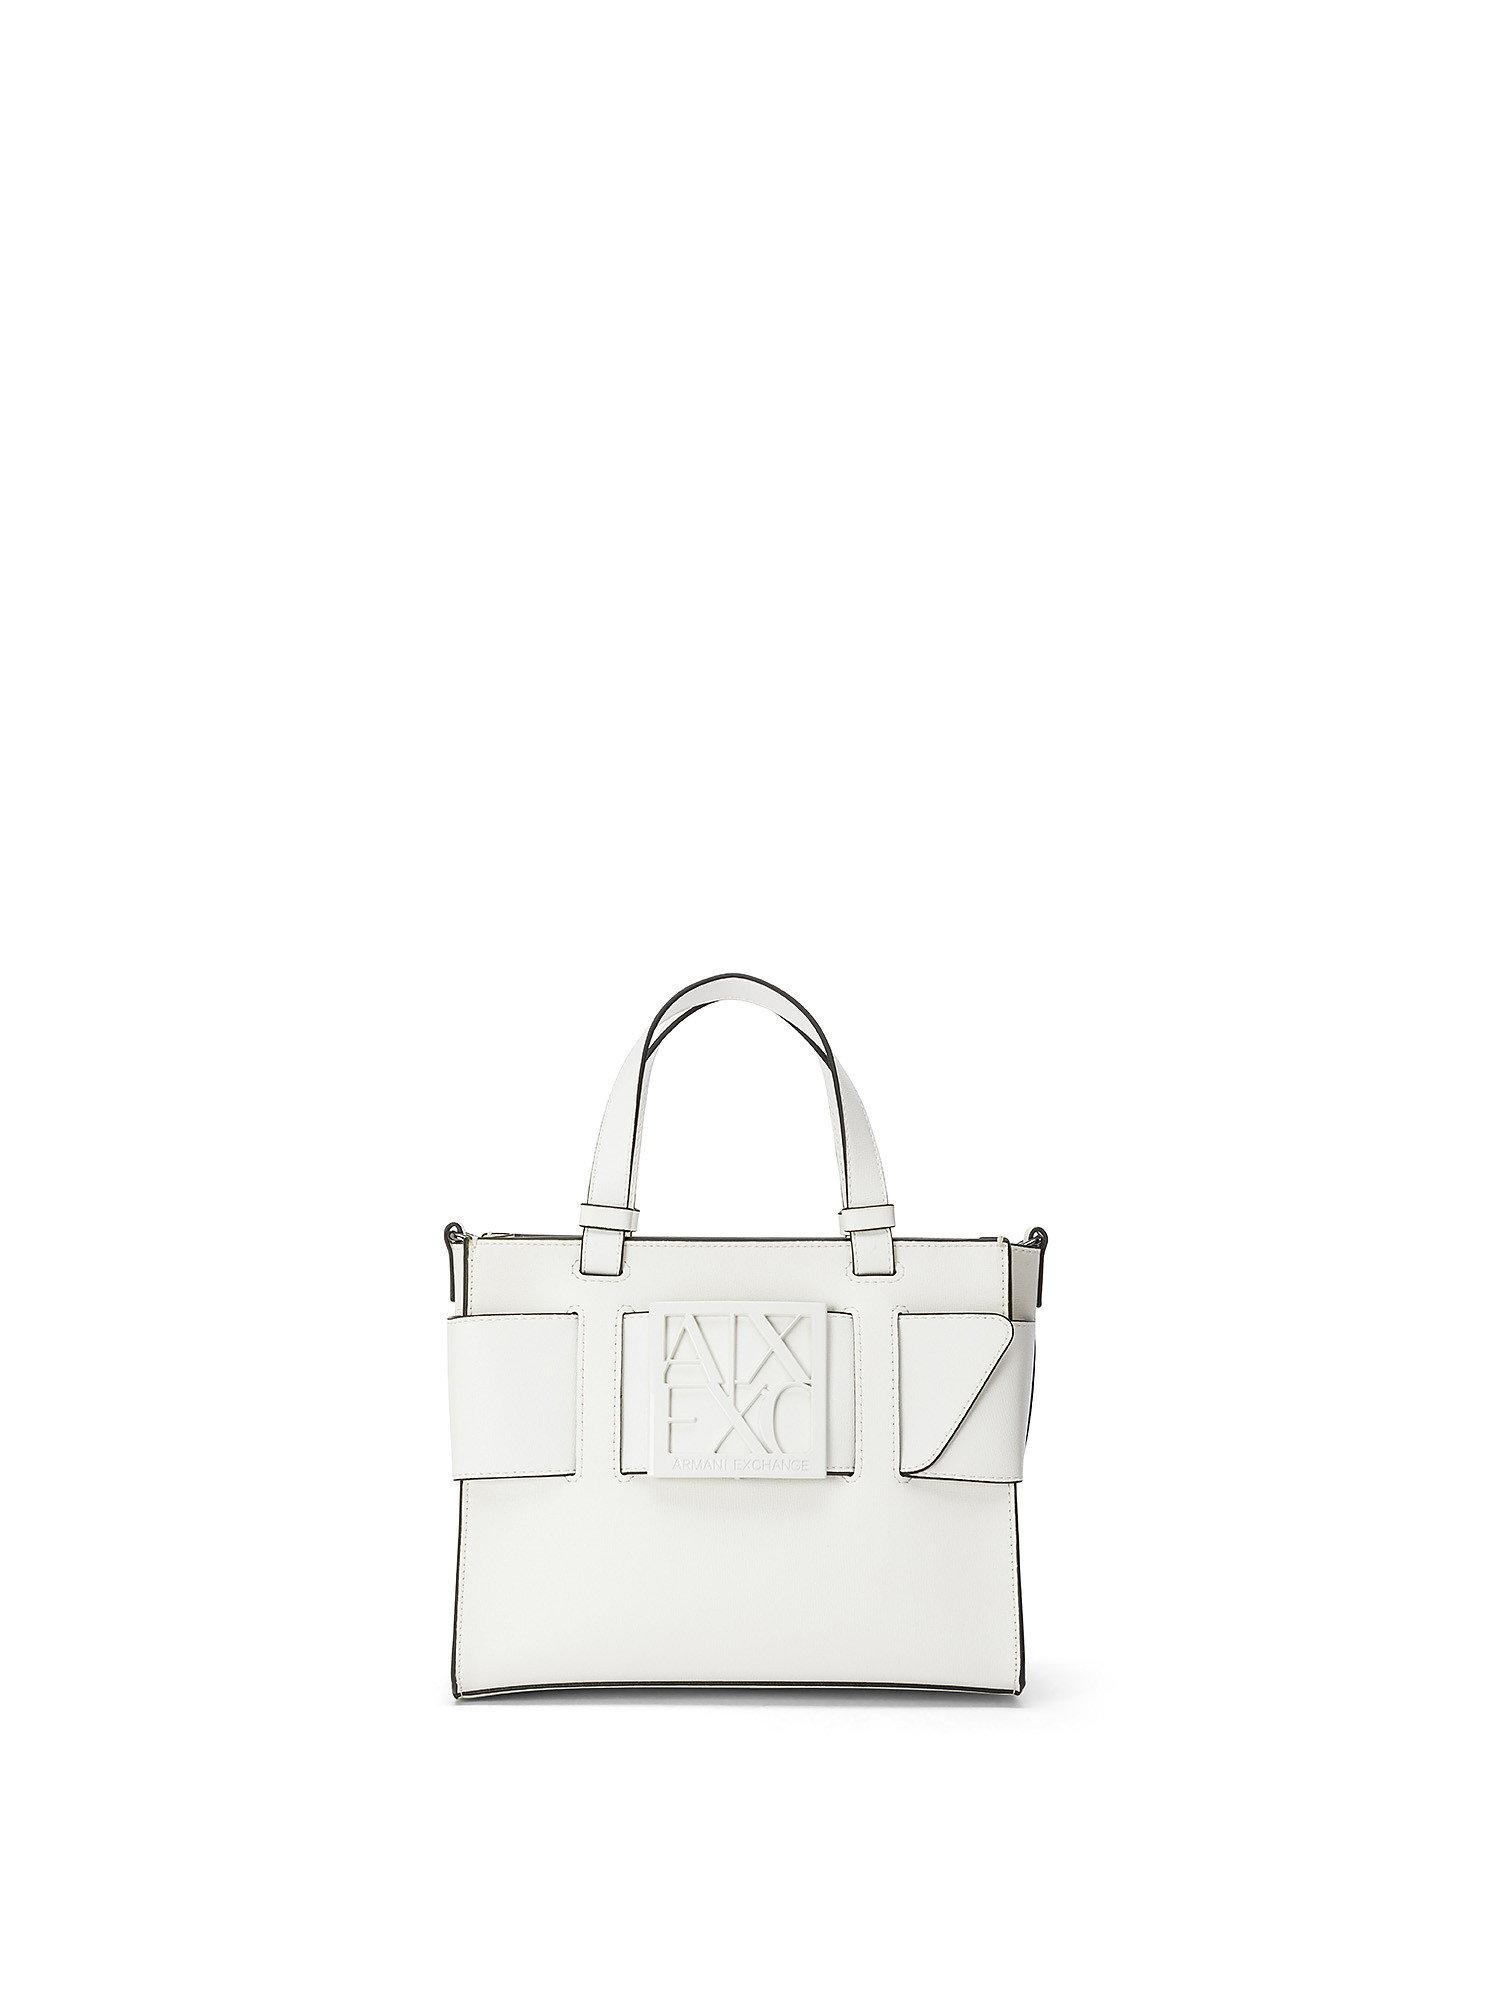 Armani Exchange - Tote bag media con logo, Bianco ghiaccio, large image number 0